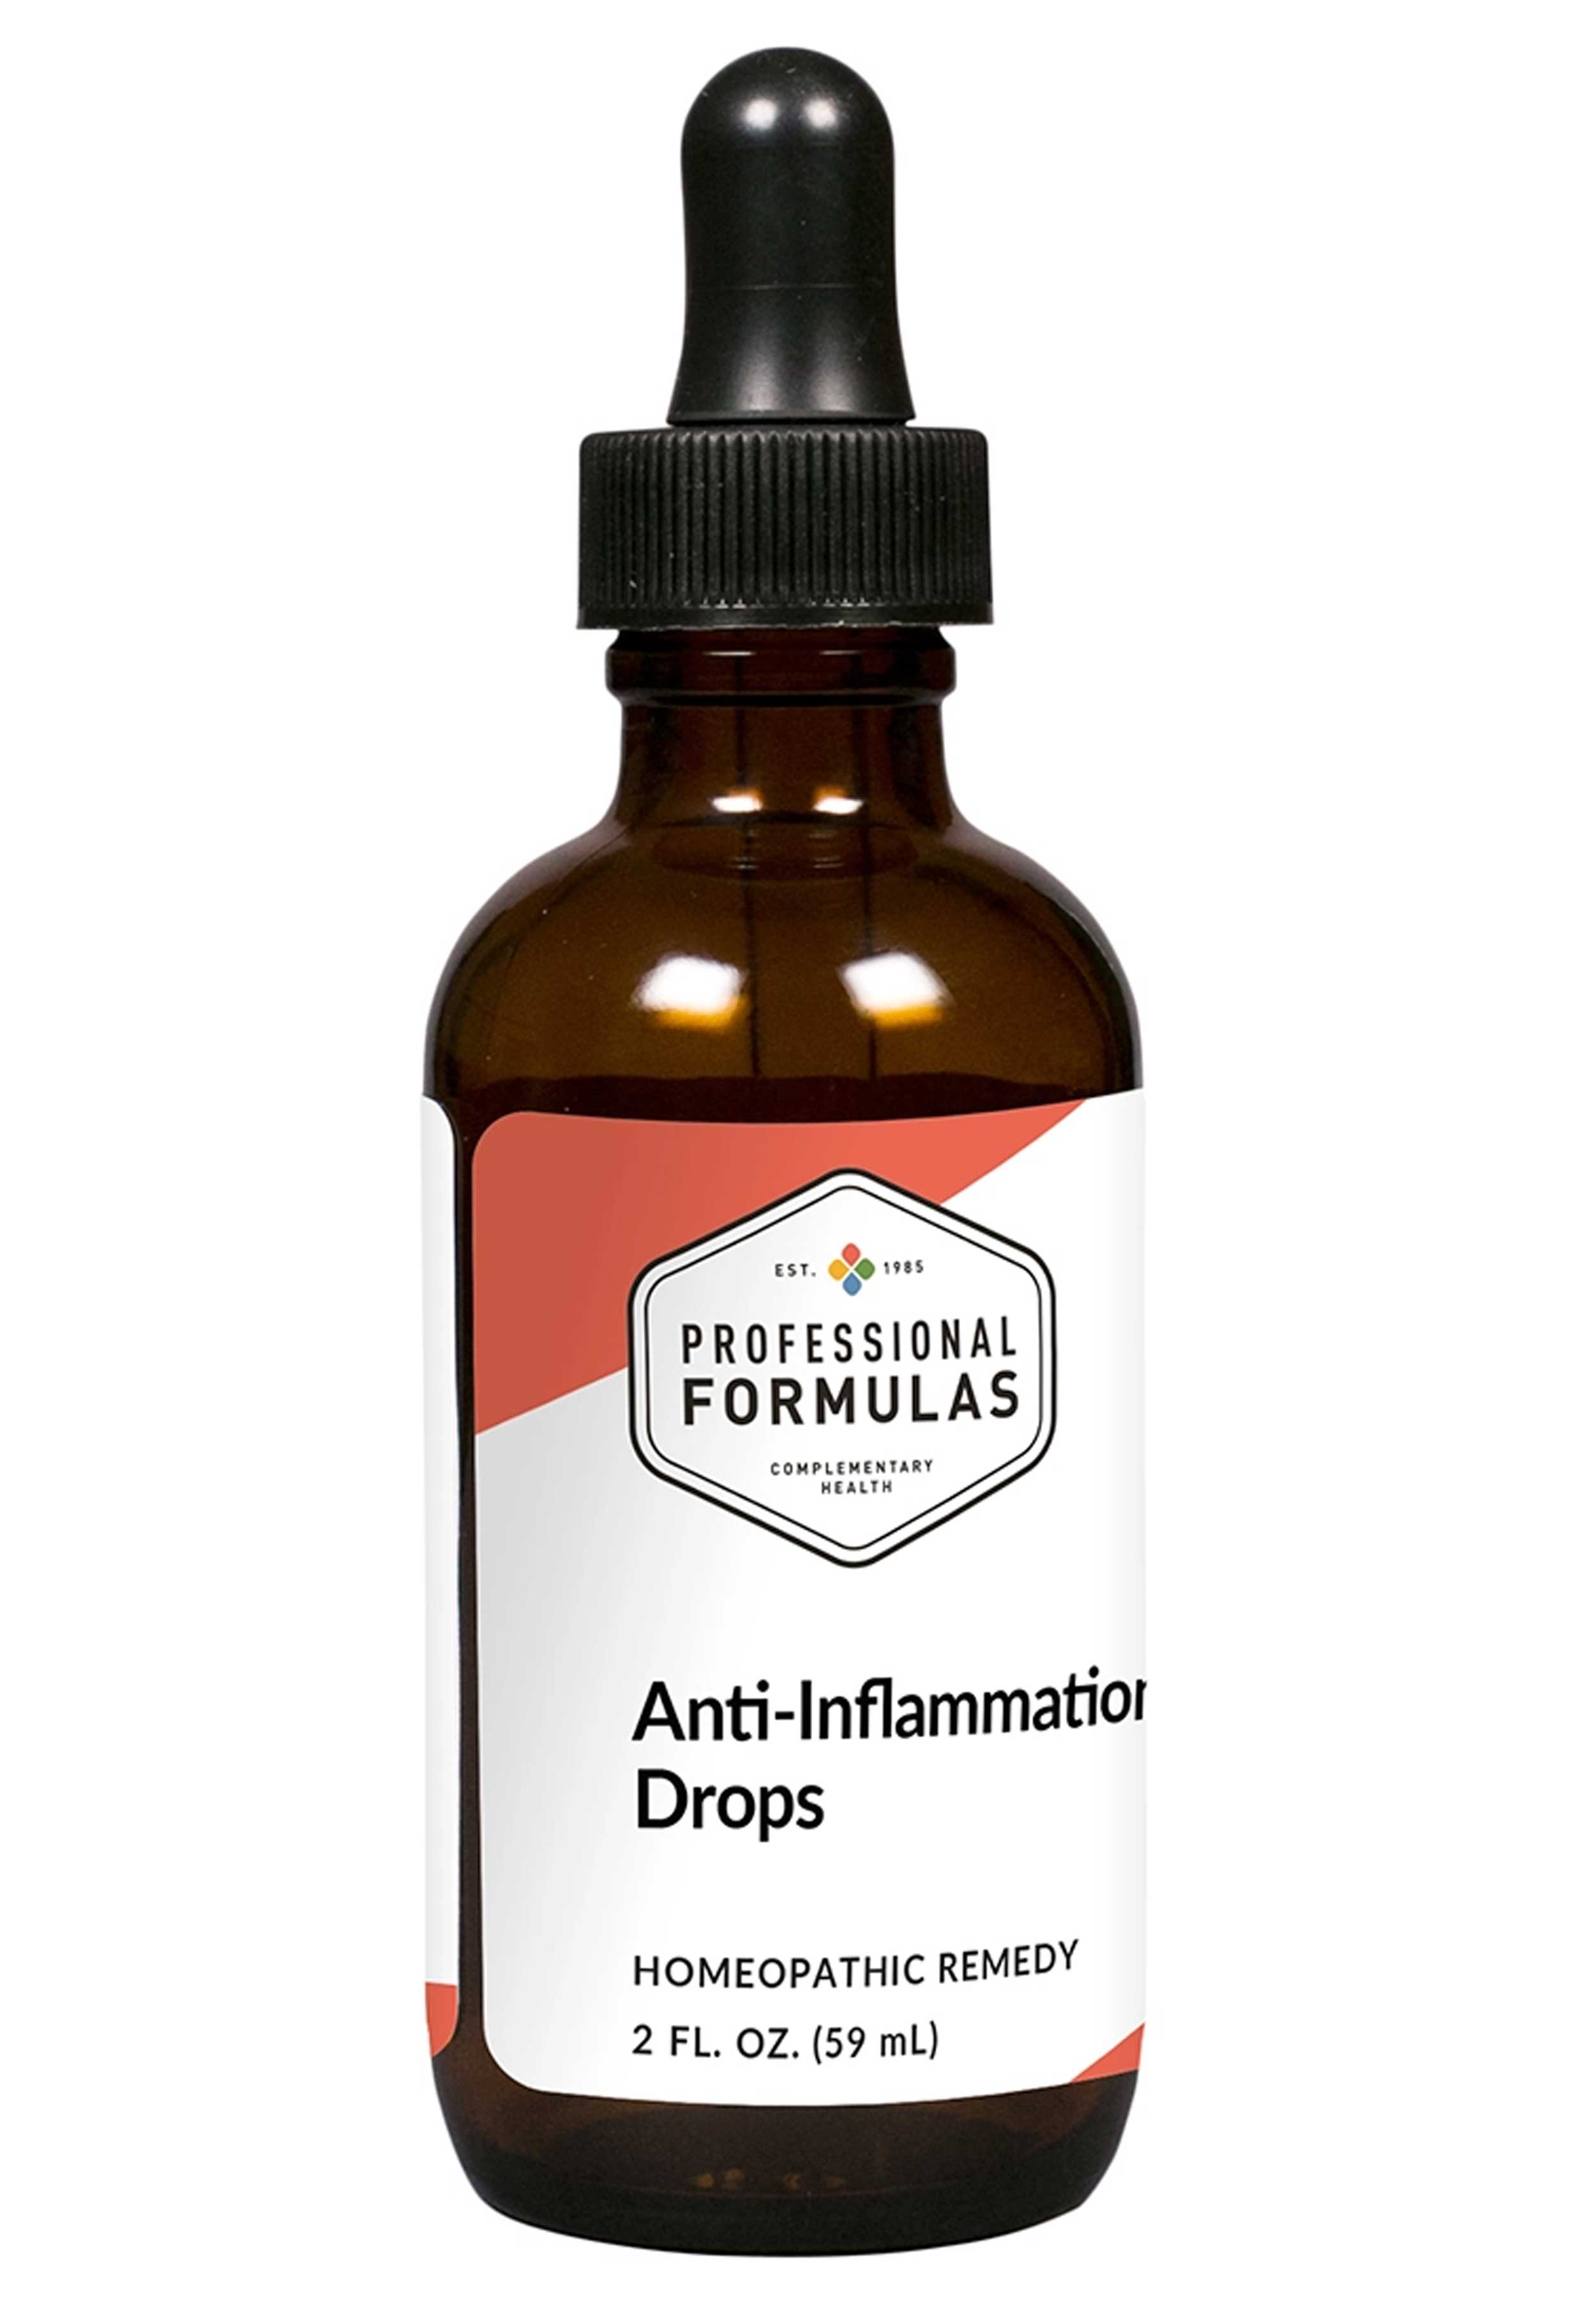 Professional Formulas Anti-Inflammation Drops